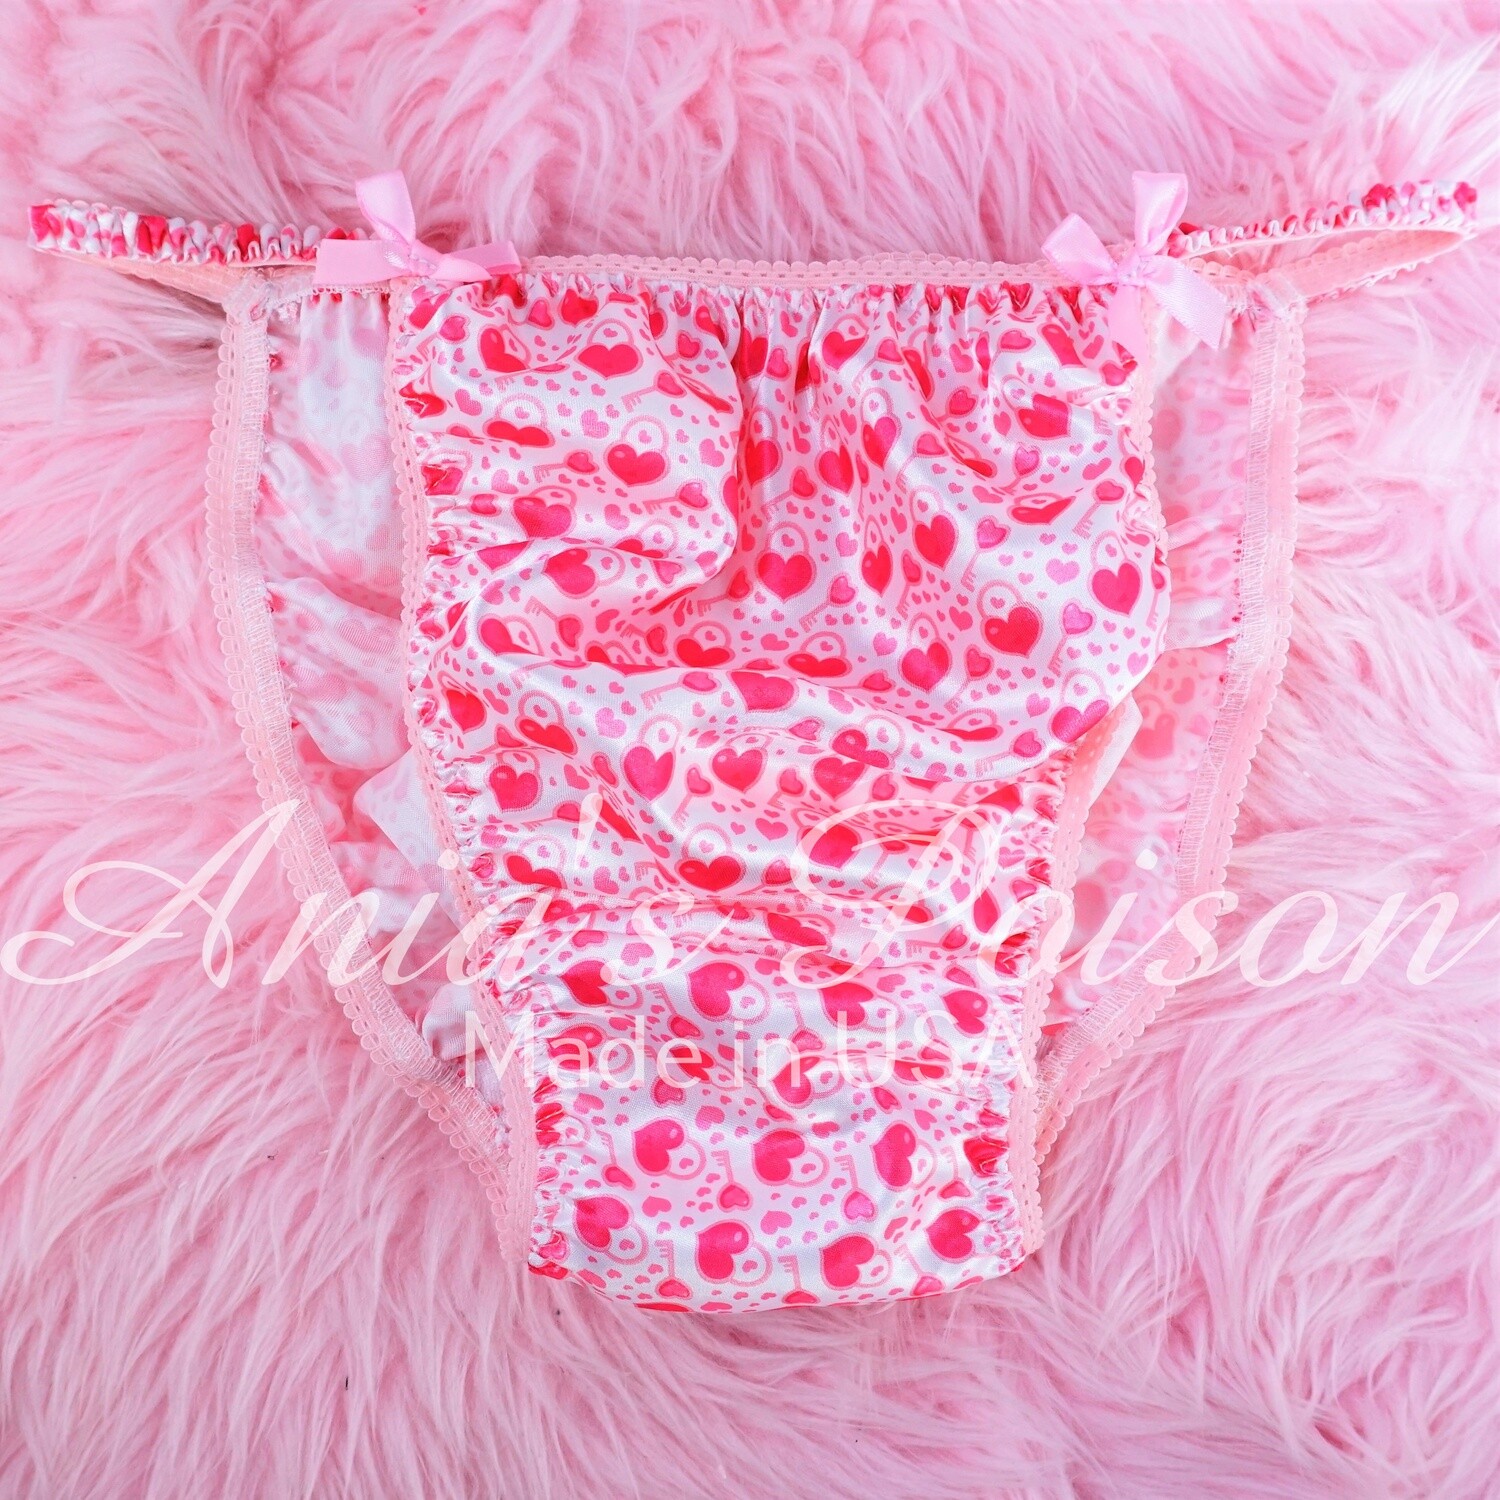 Valentine's Day Shiny Satin string bikini mens panties - Stunning Pink micro heart print - Super Limited